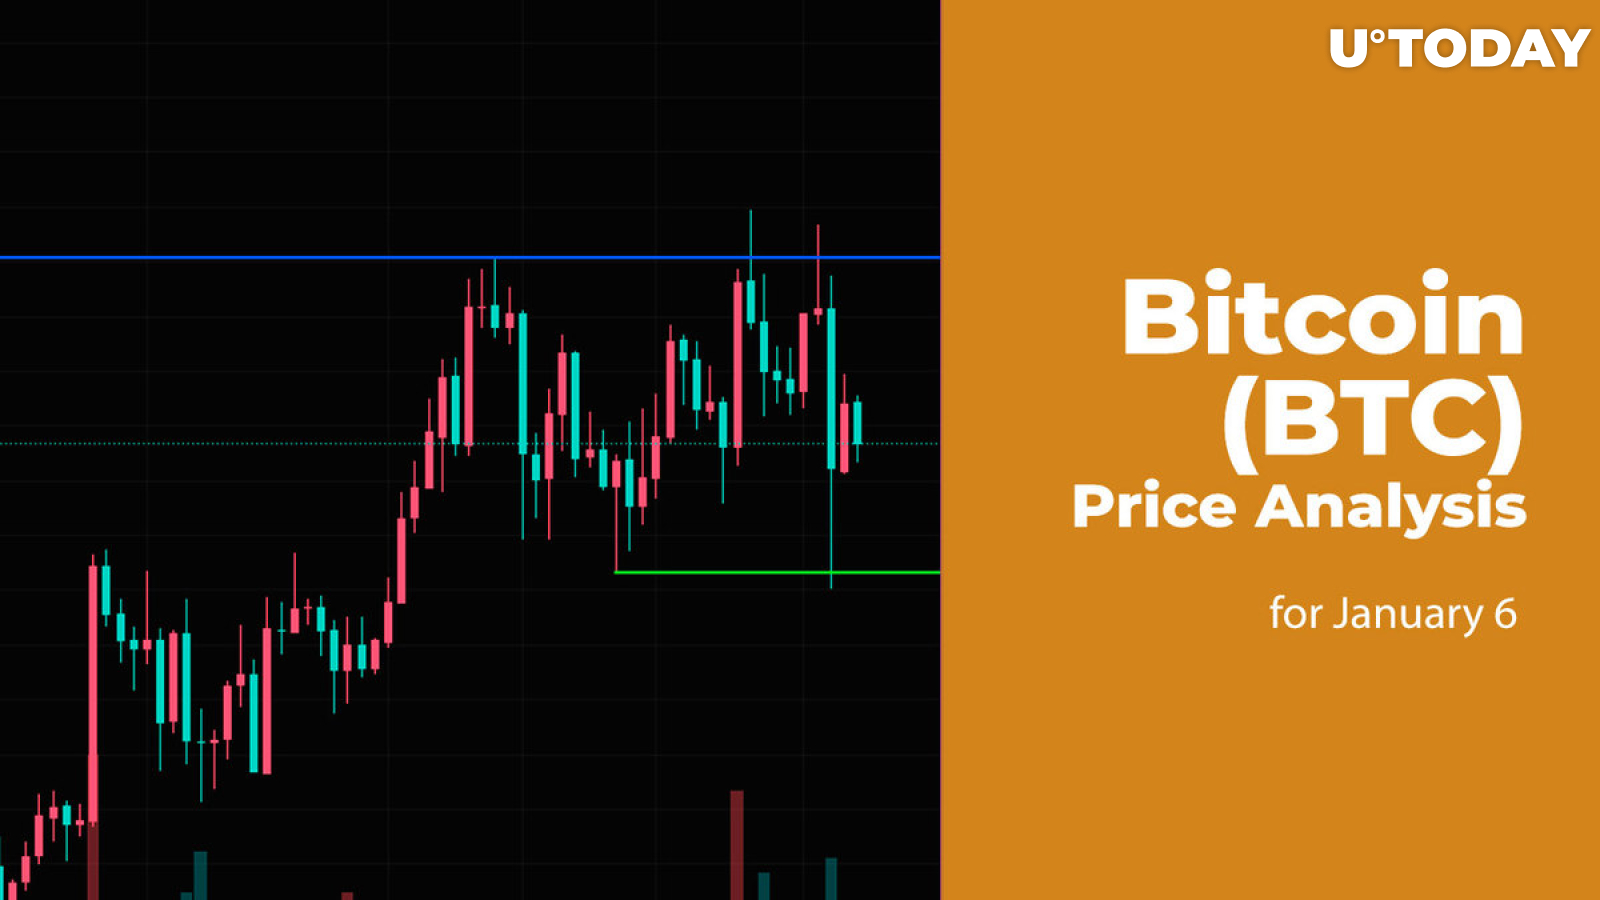 Bitcoin (BTC) Price Analysis for January 6